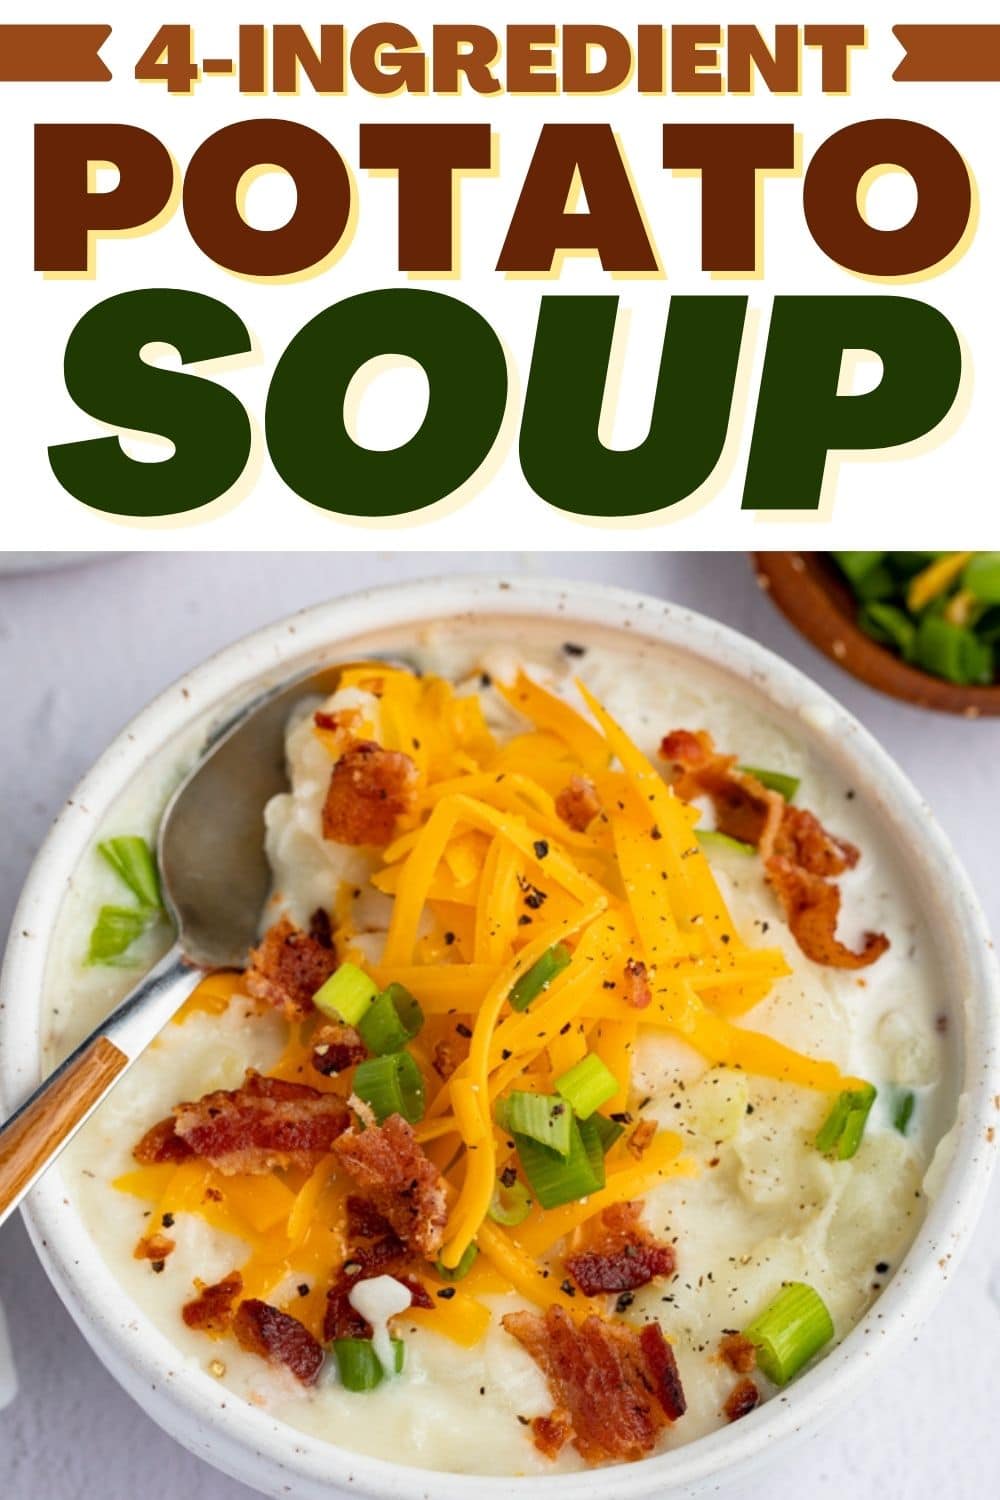 https://insanelygoodrecipes.com/wp-content/uploads/2021/11/4-Ingredient-Potato-Soup-2.jpg